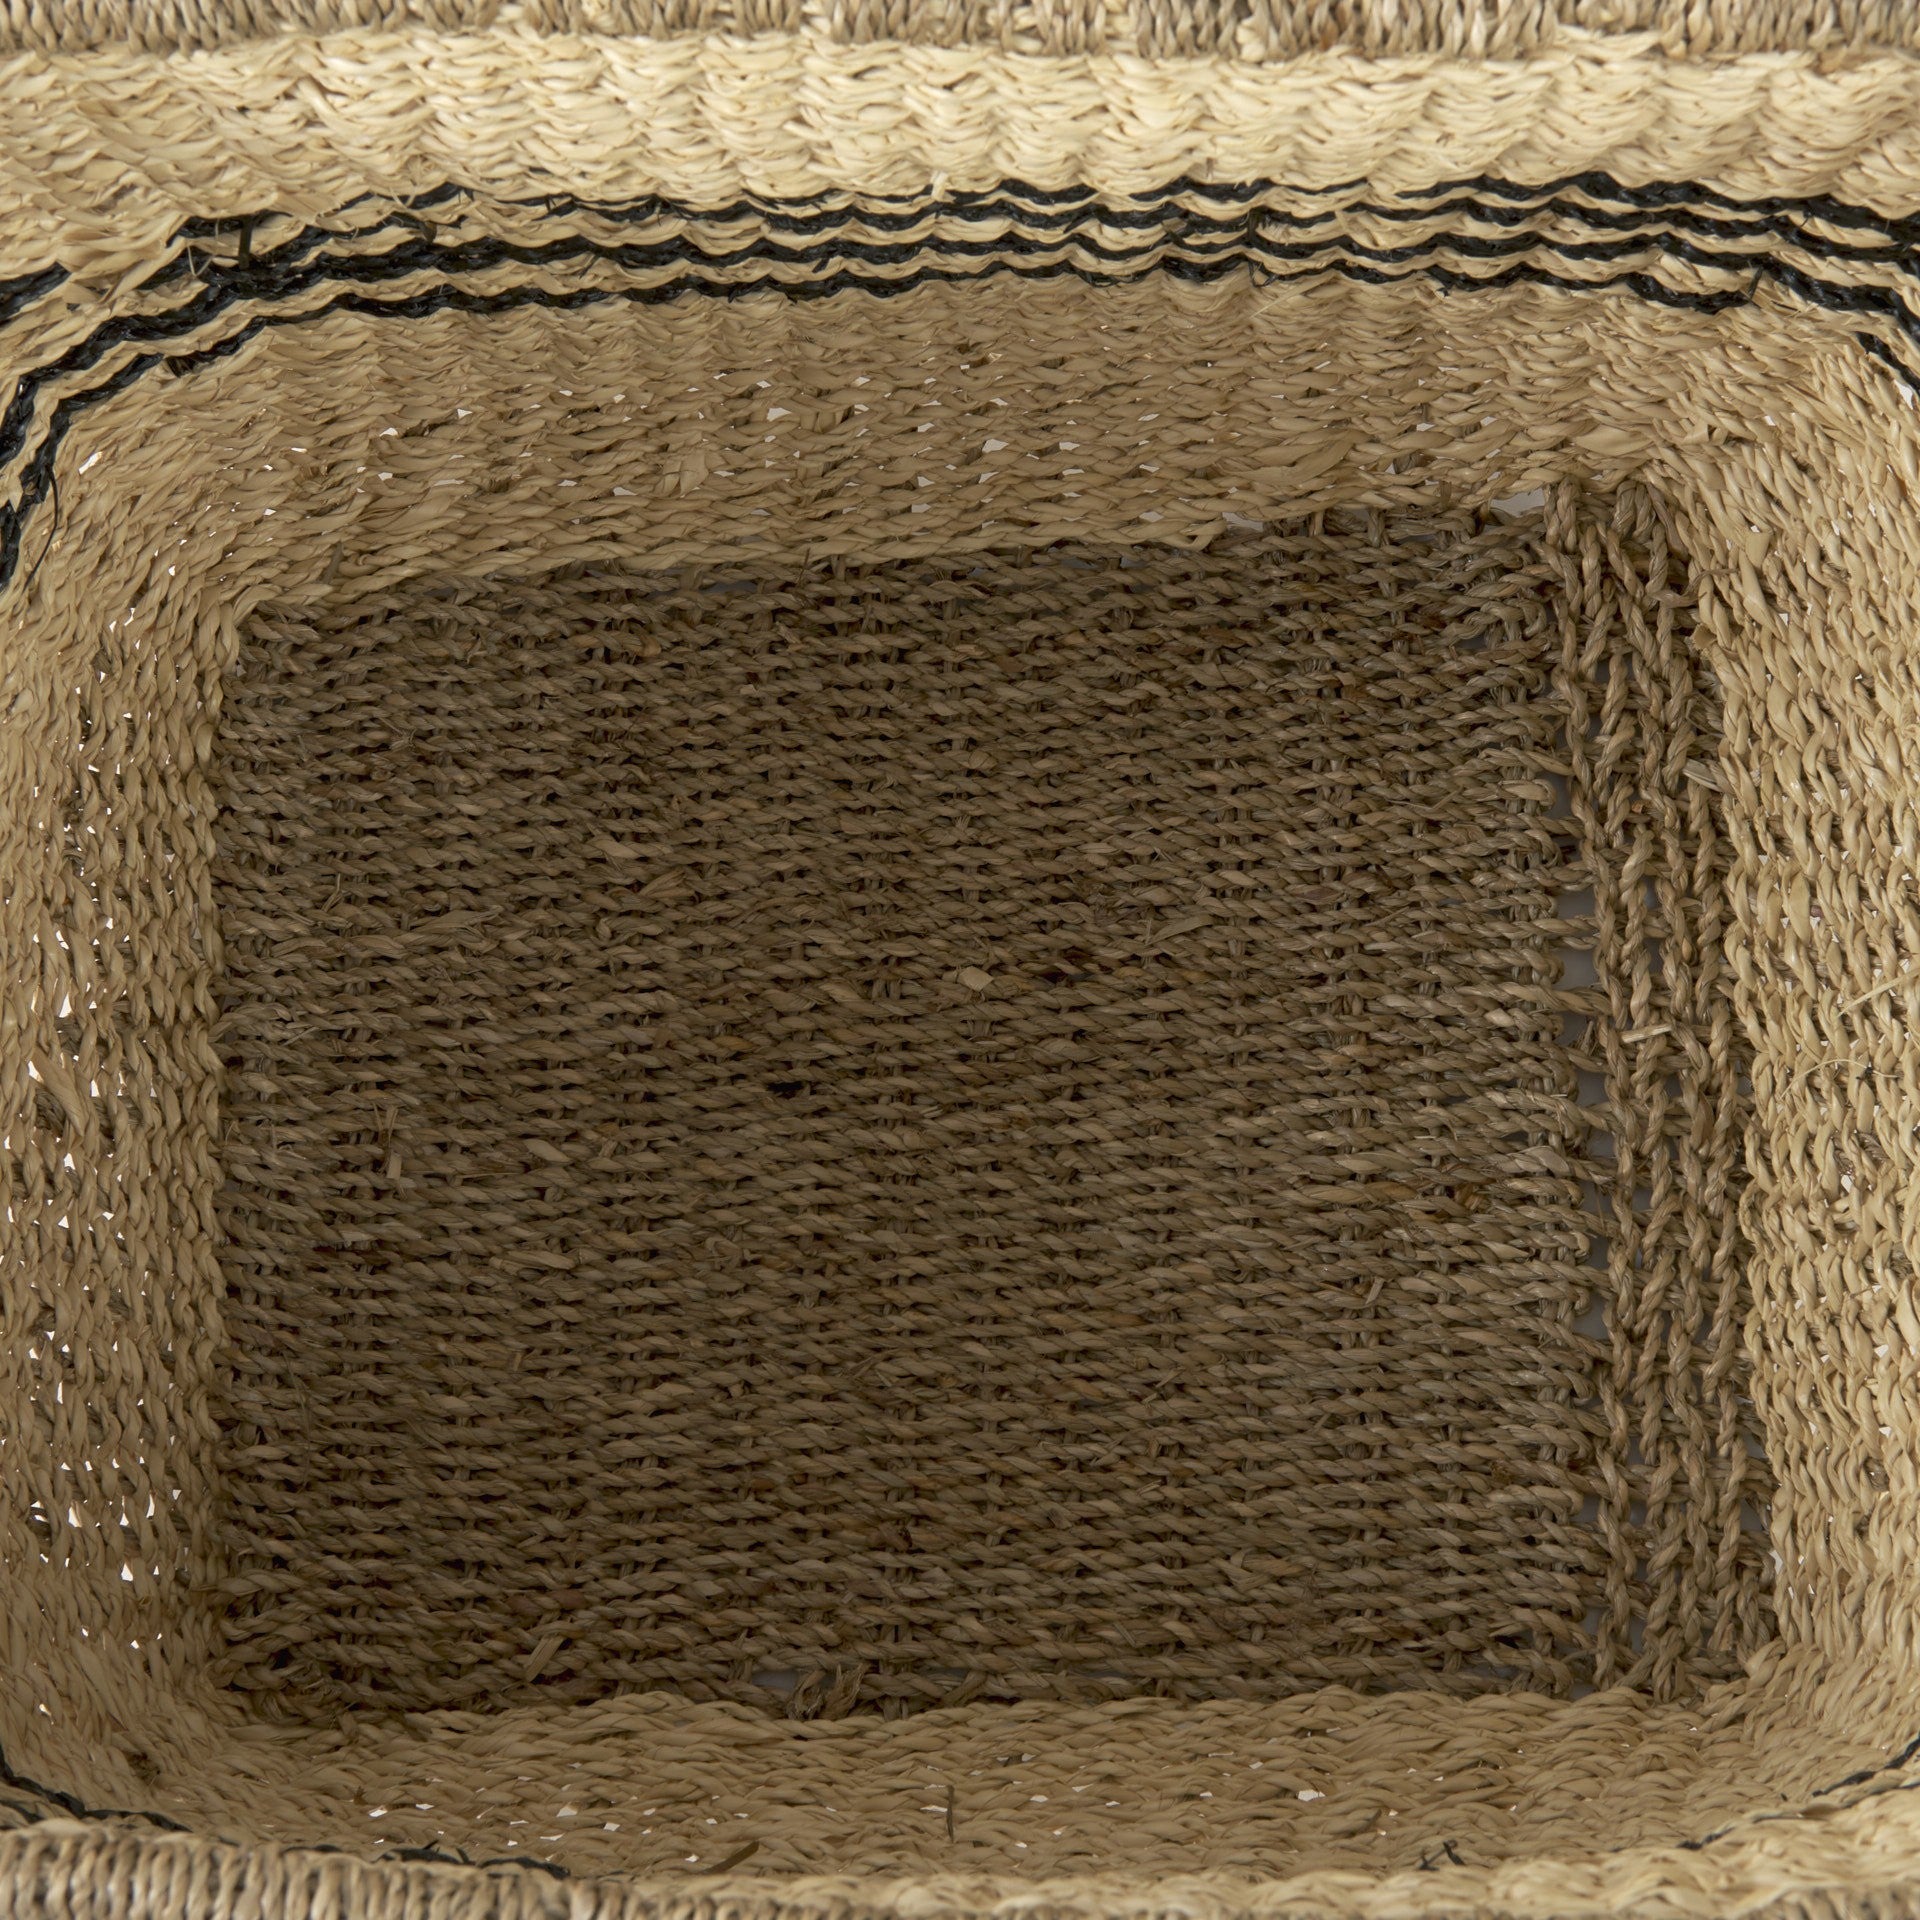 Set Of Two Striped Wicker Storage Baskets